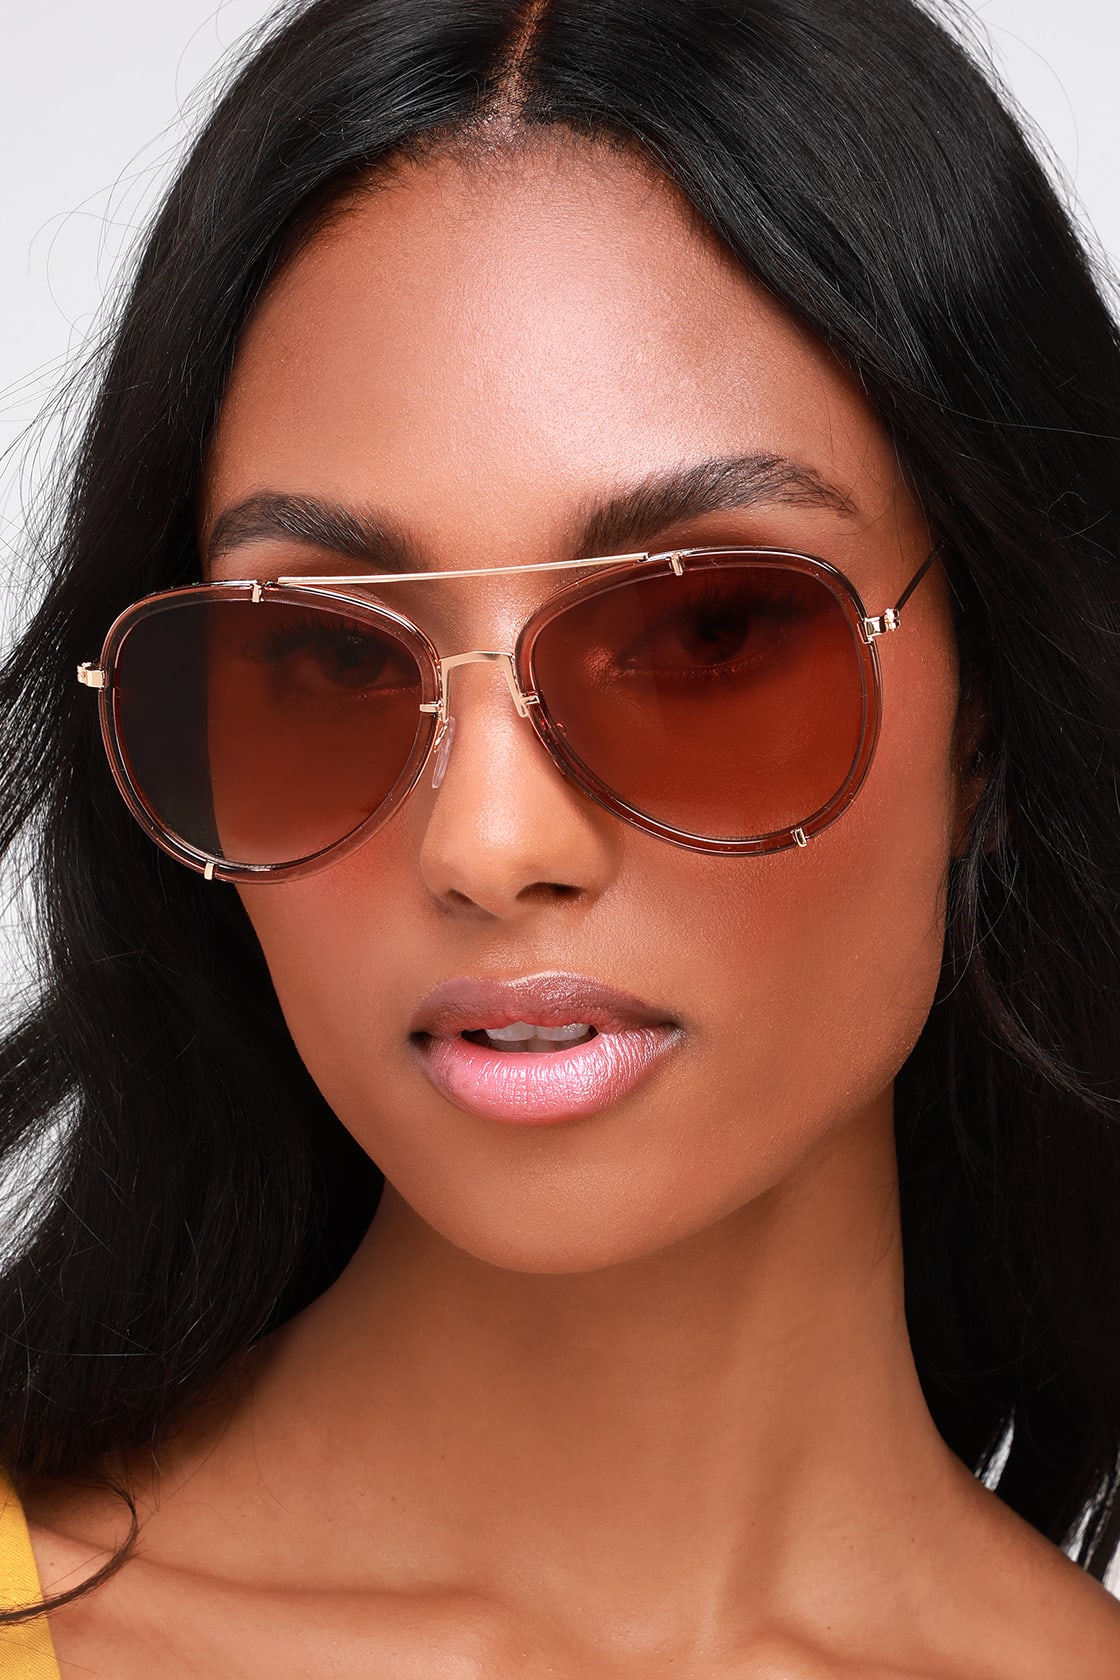 Best designer sunglasses on Amazon: Ray-Ban, Kate Spade, Oakley, Maui Jim